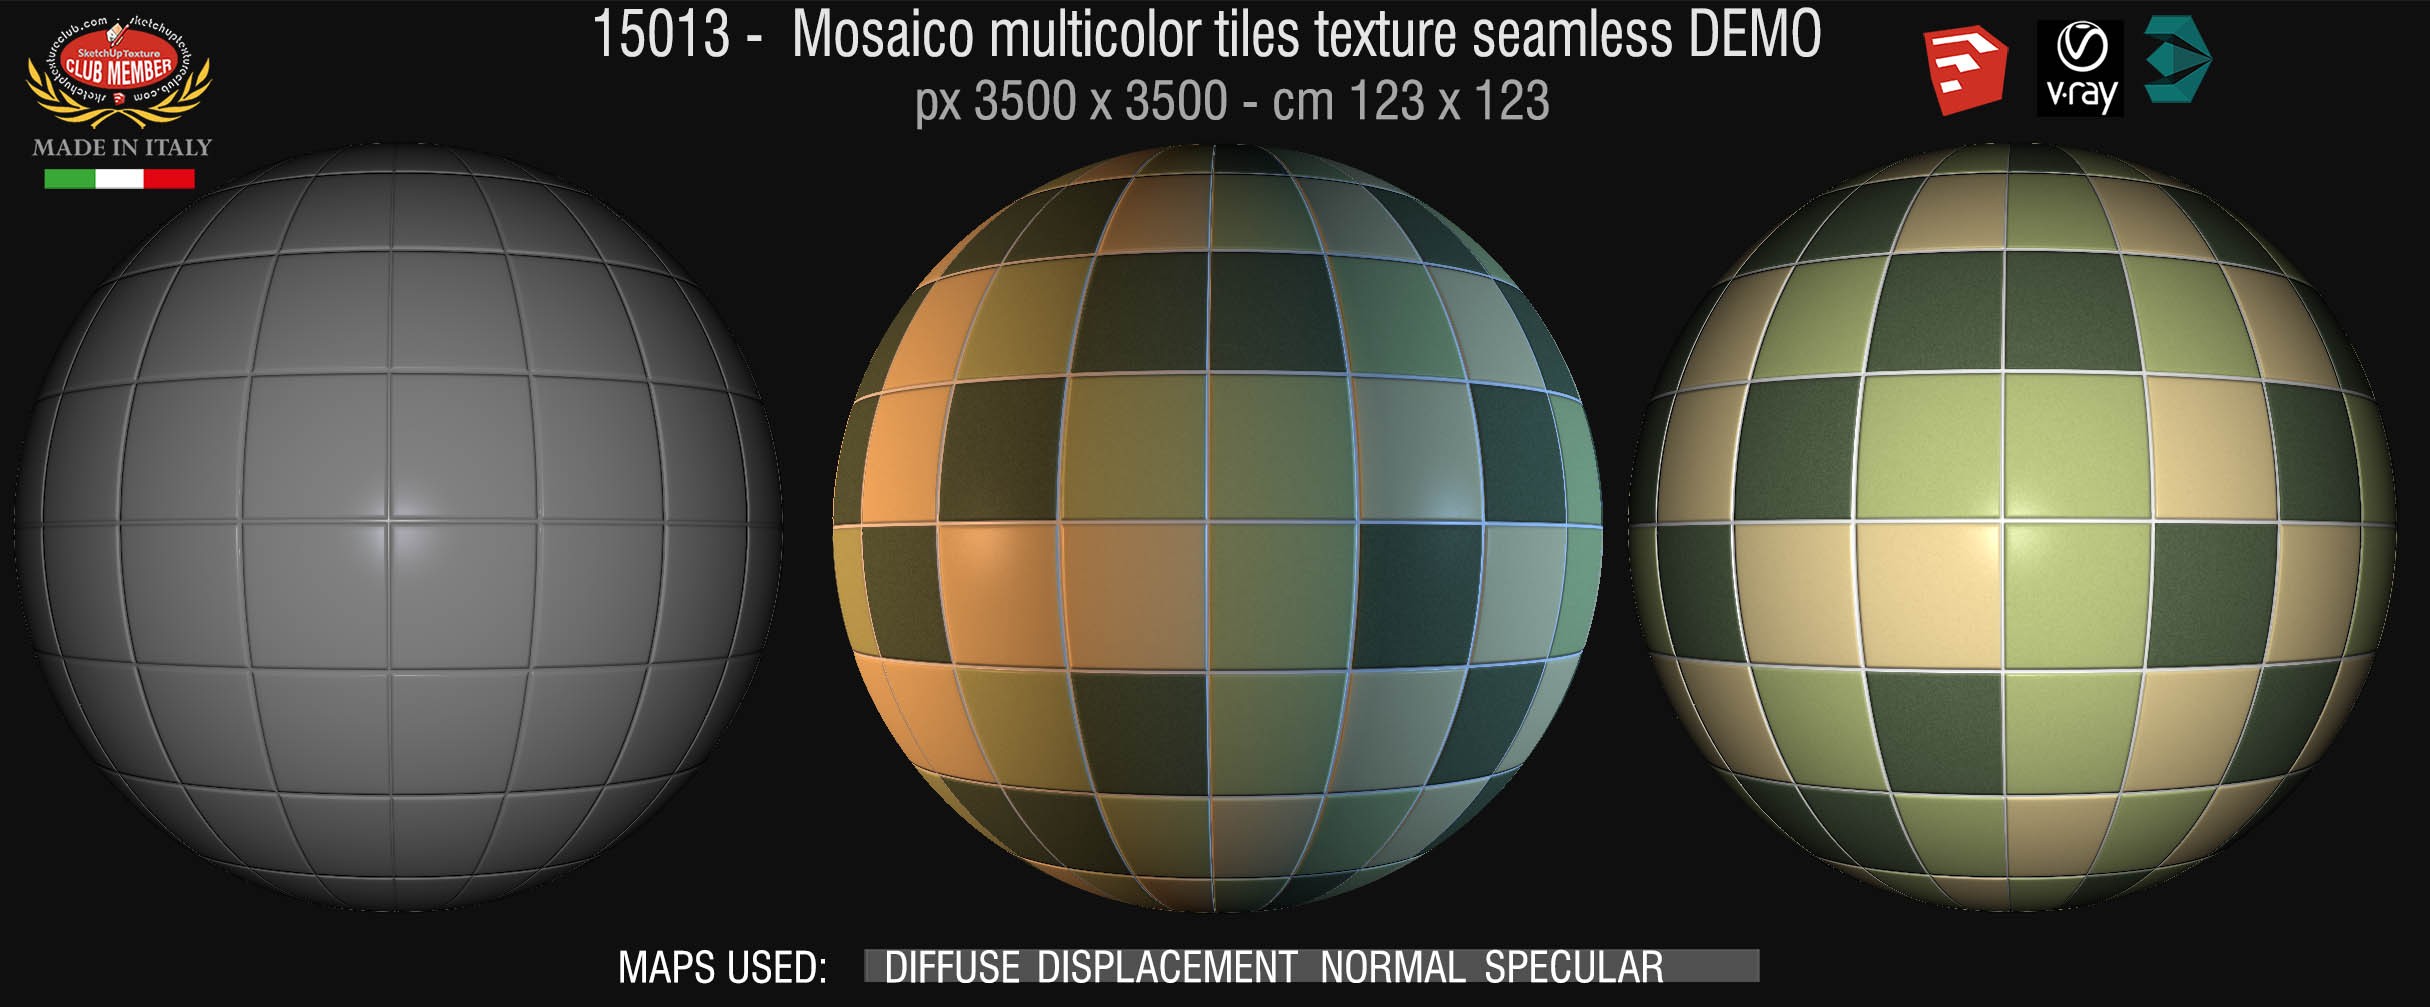 15013 Mosaico multicolor tiles texture seamless + maps DEMO